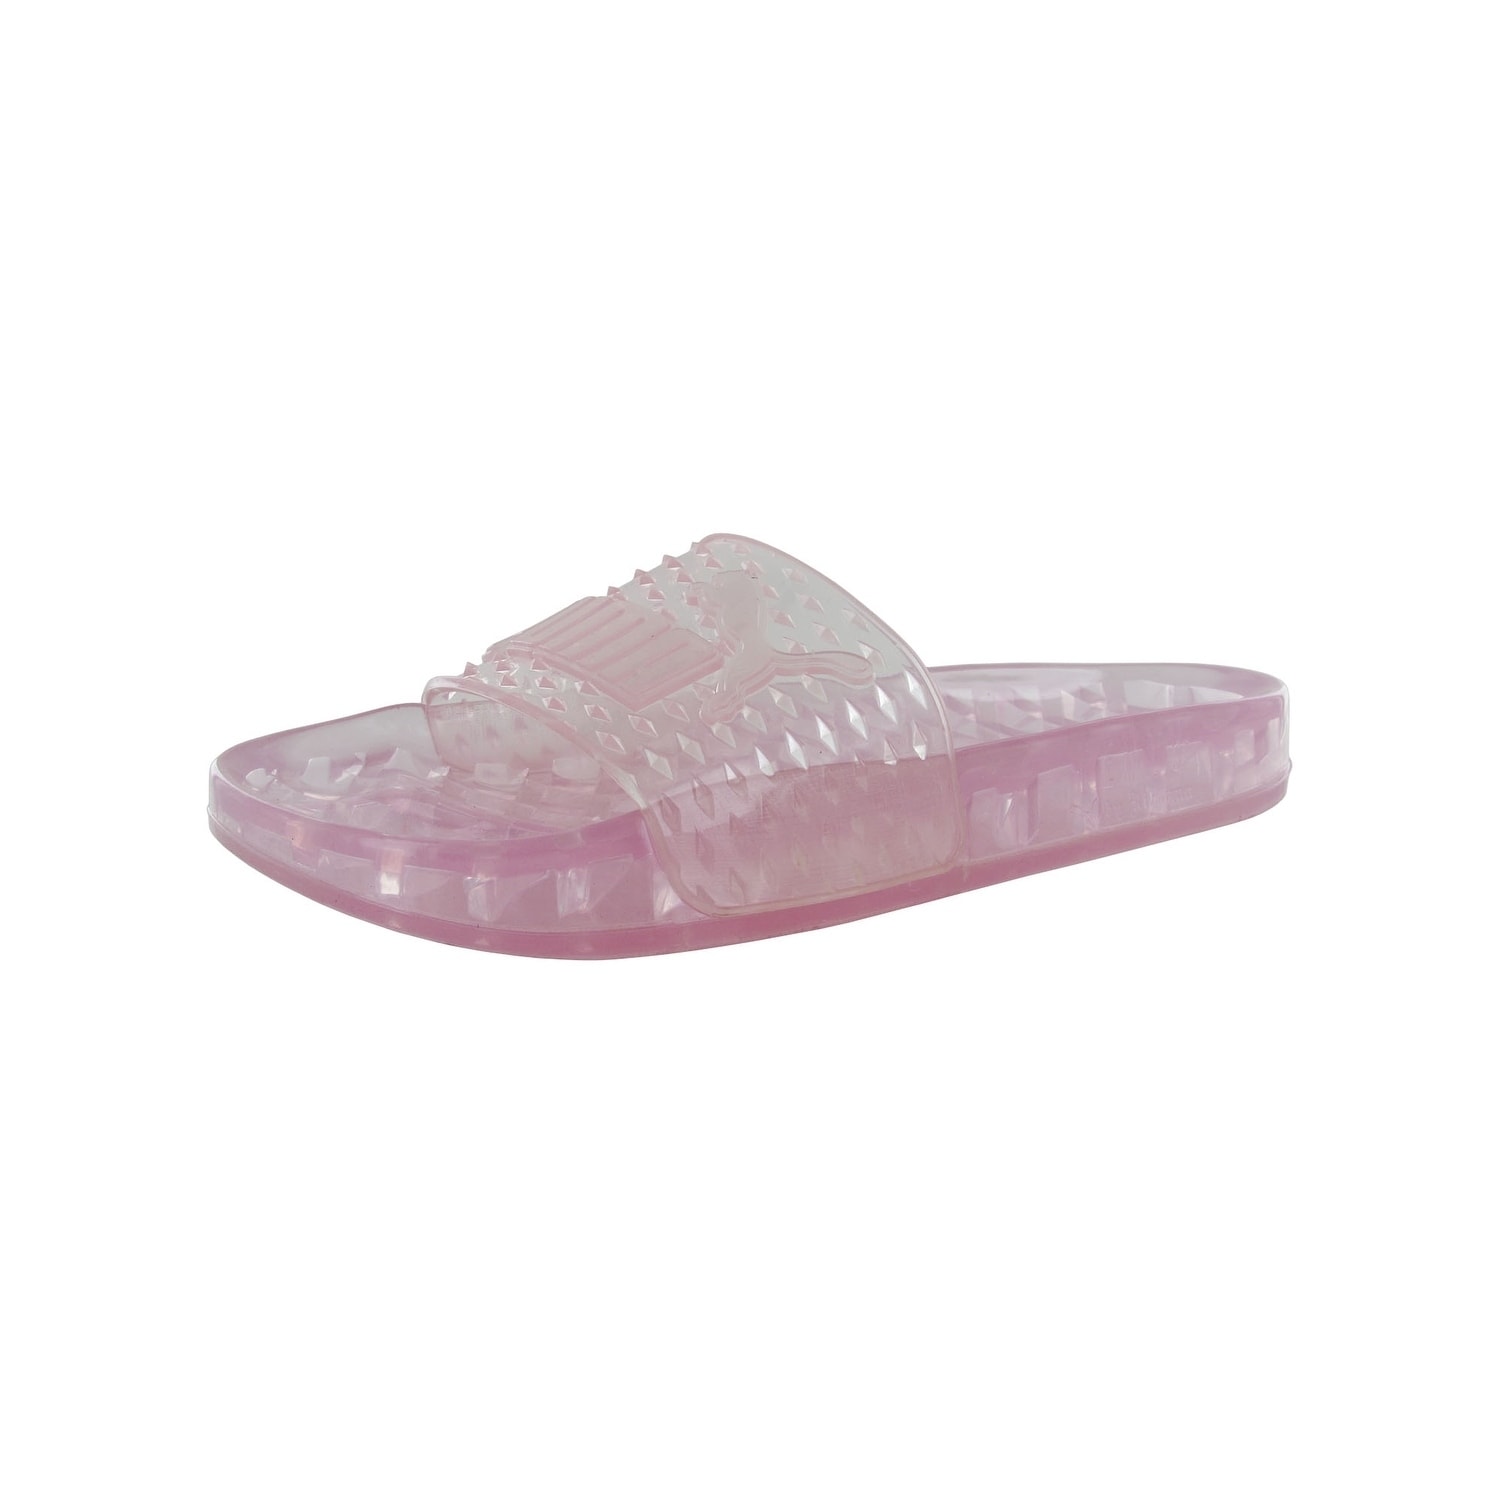 puma jelly slides size 11